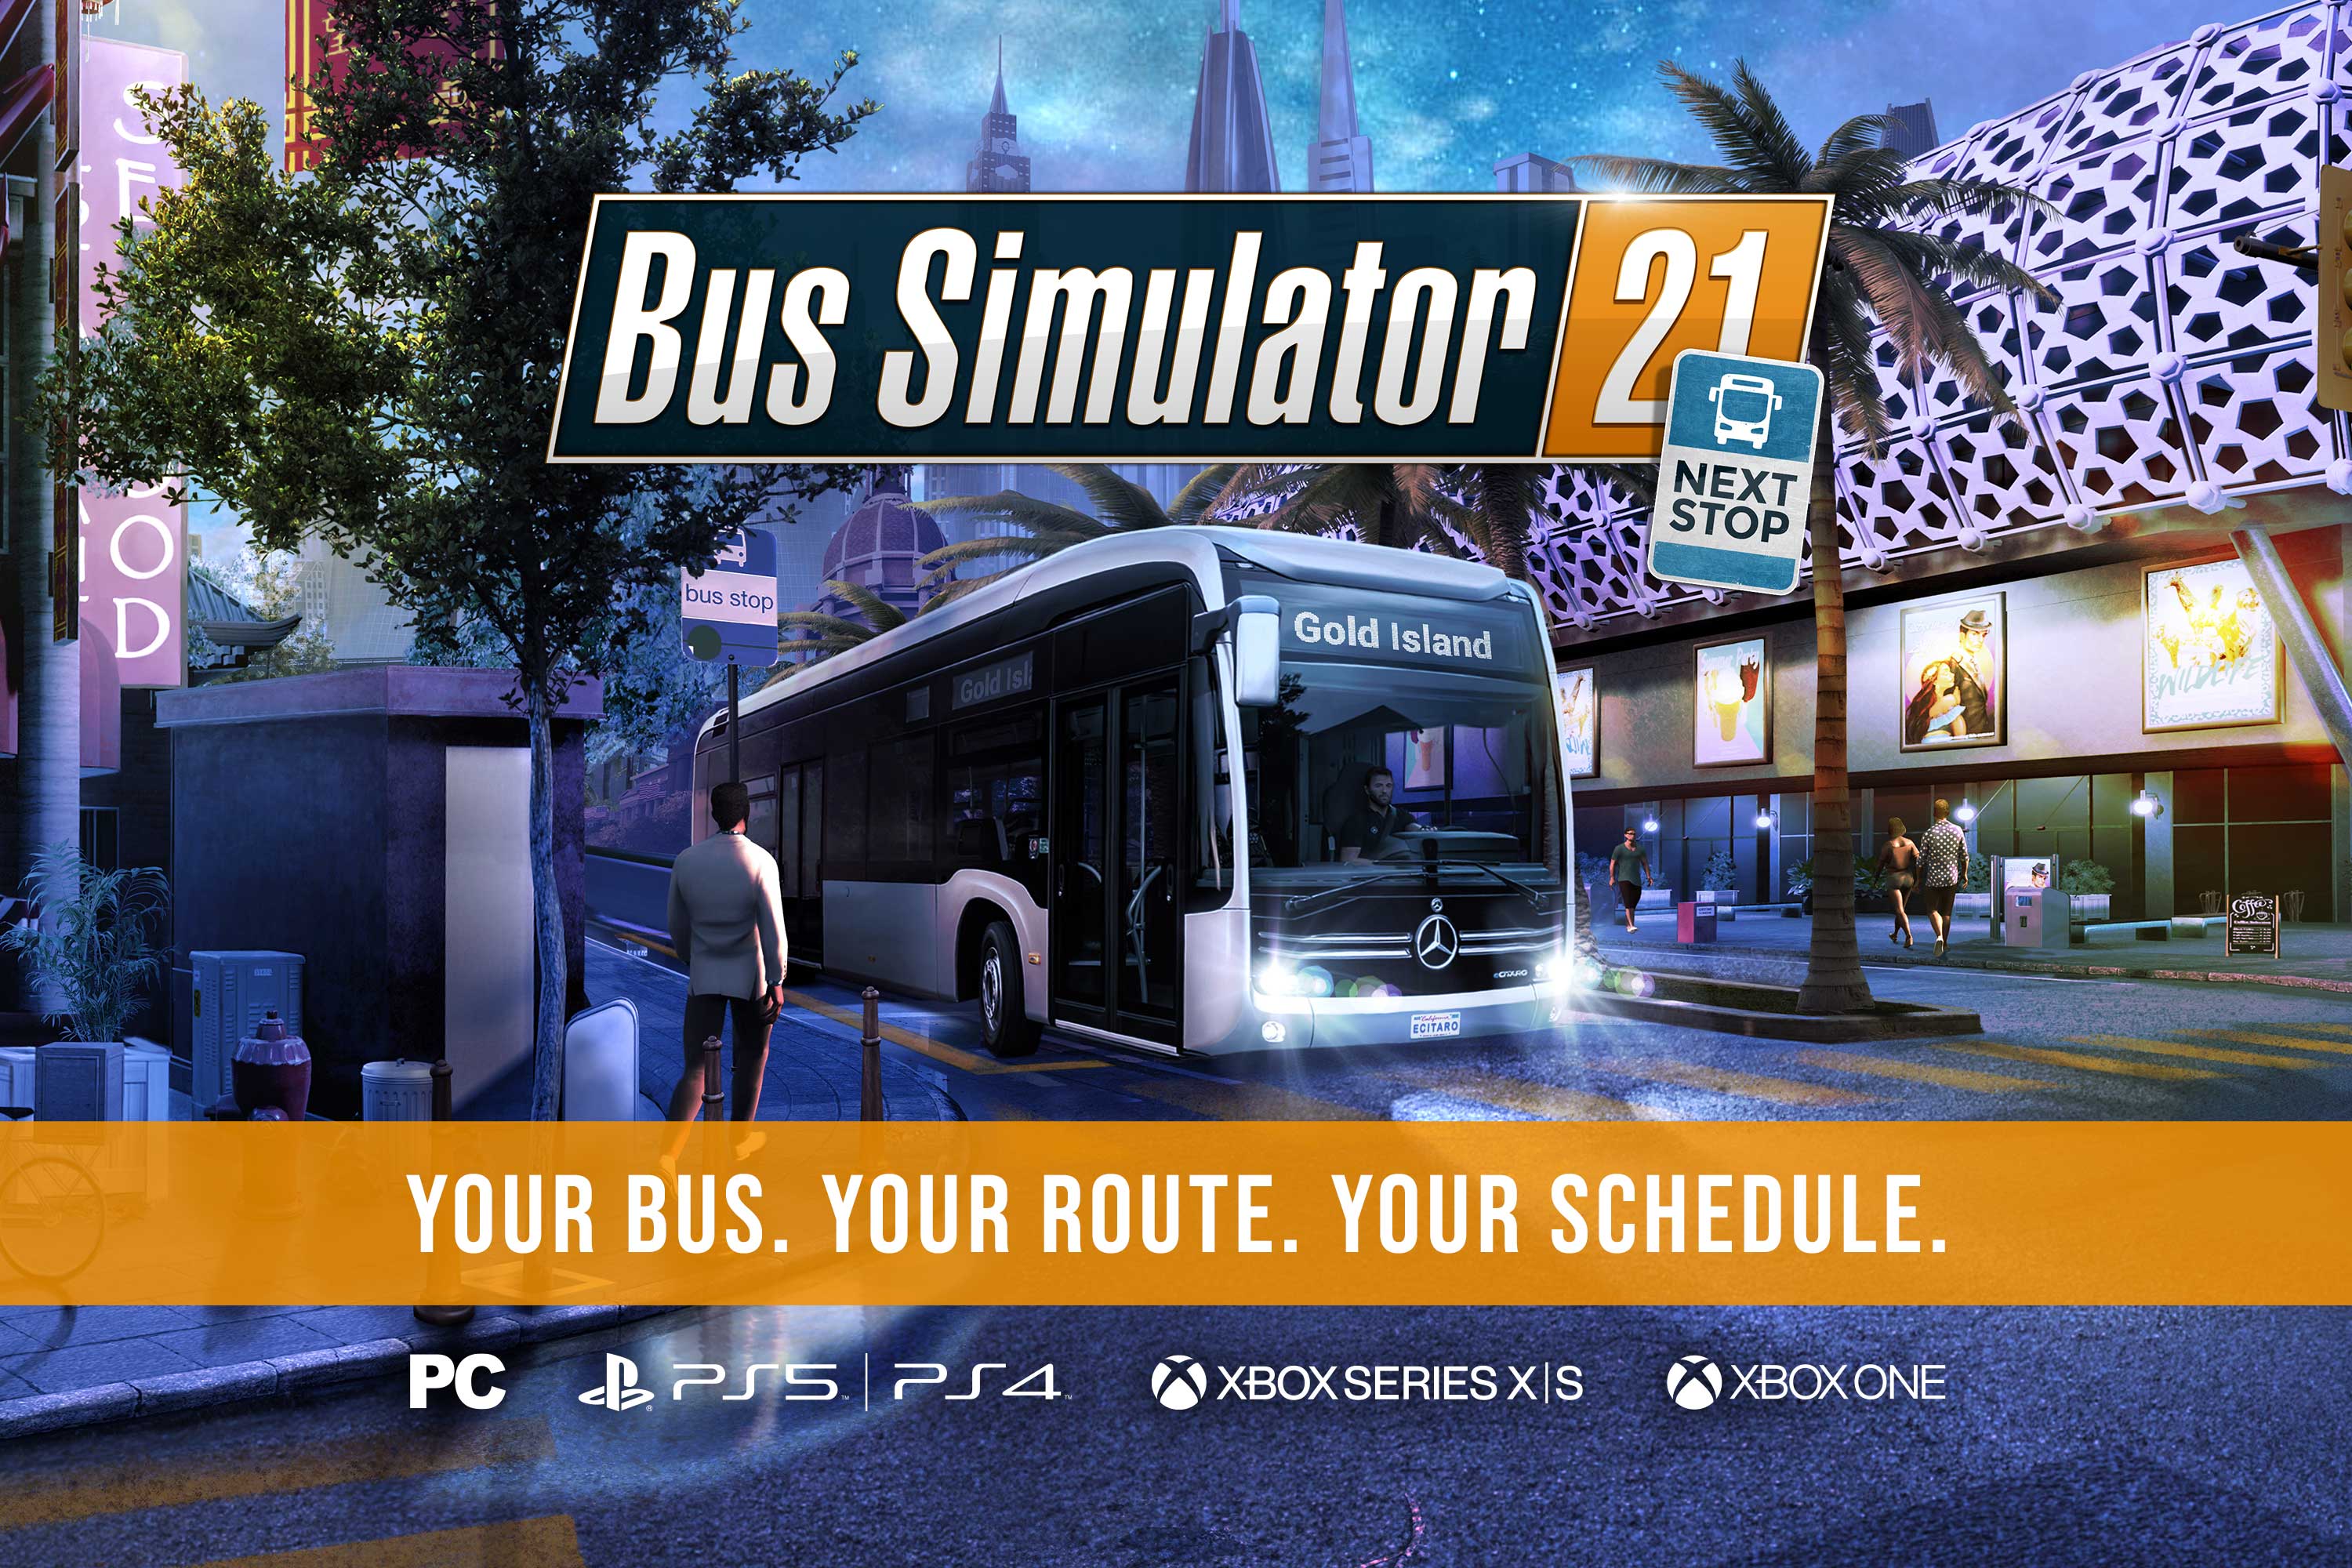 bus simulator 18 mods download